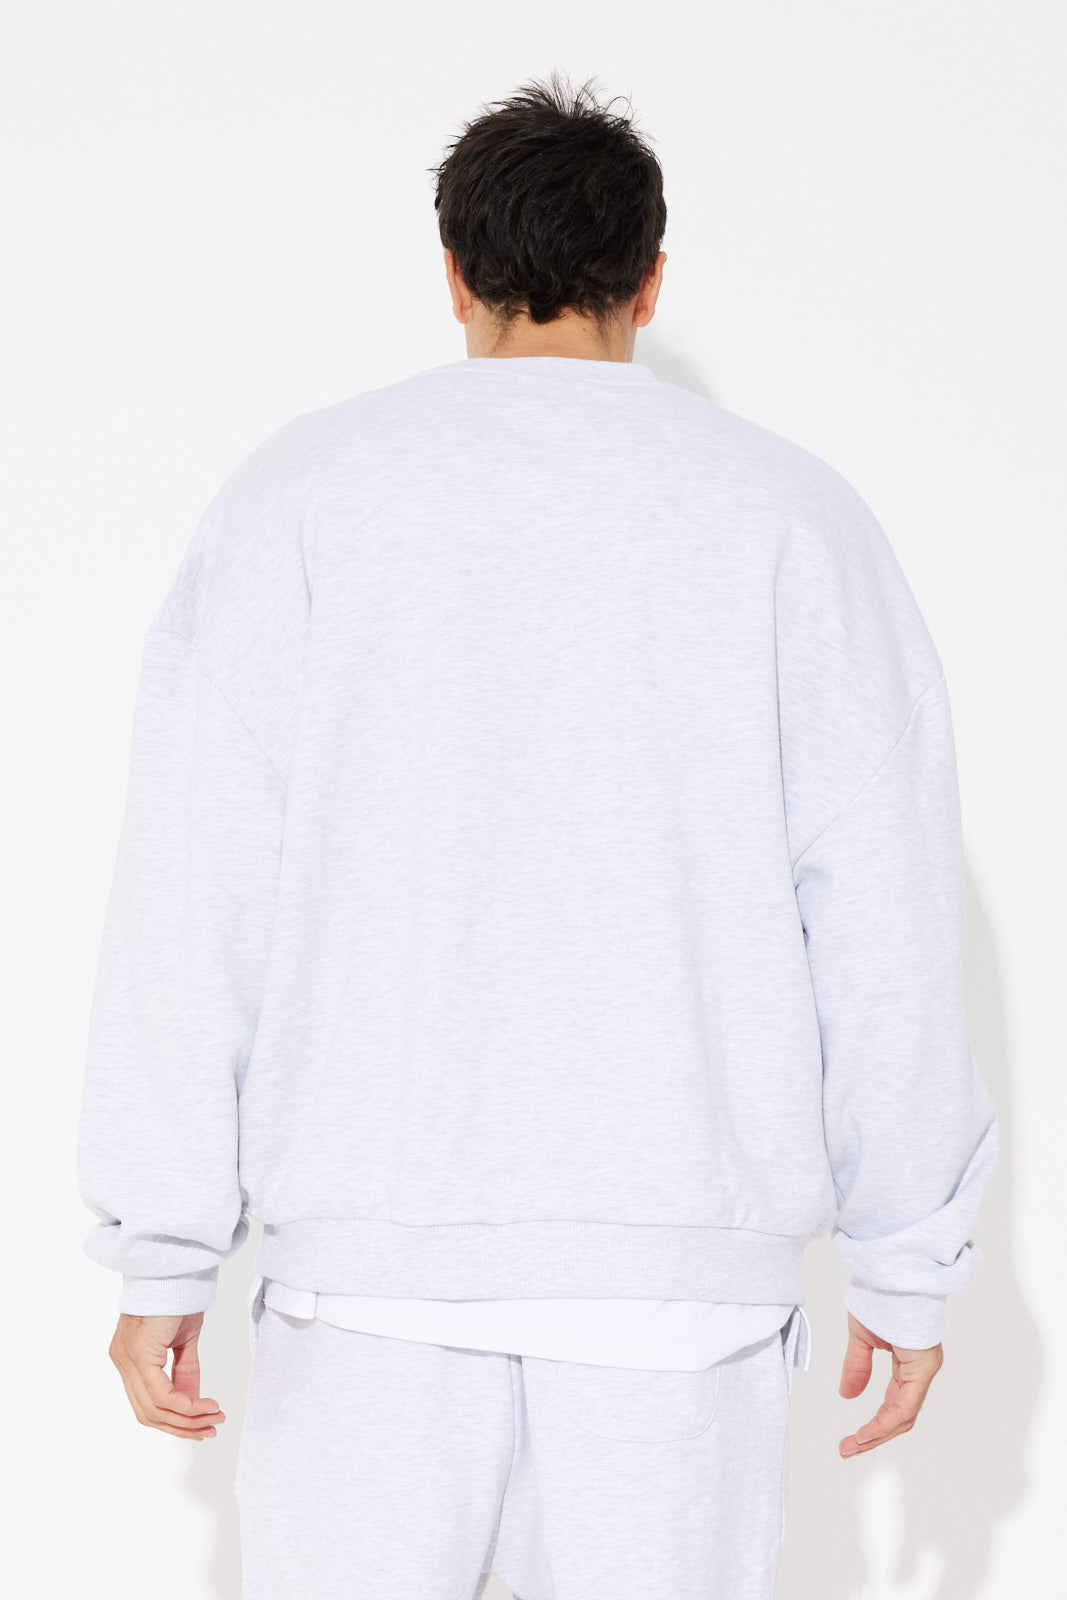 NTH Box Sweater Grey - SALE